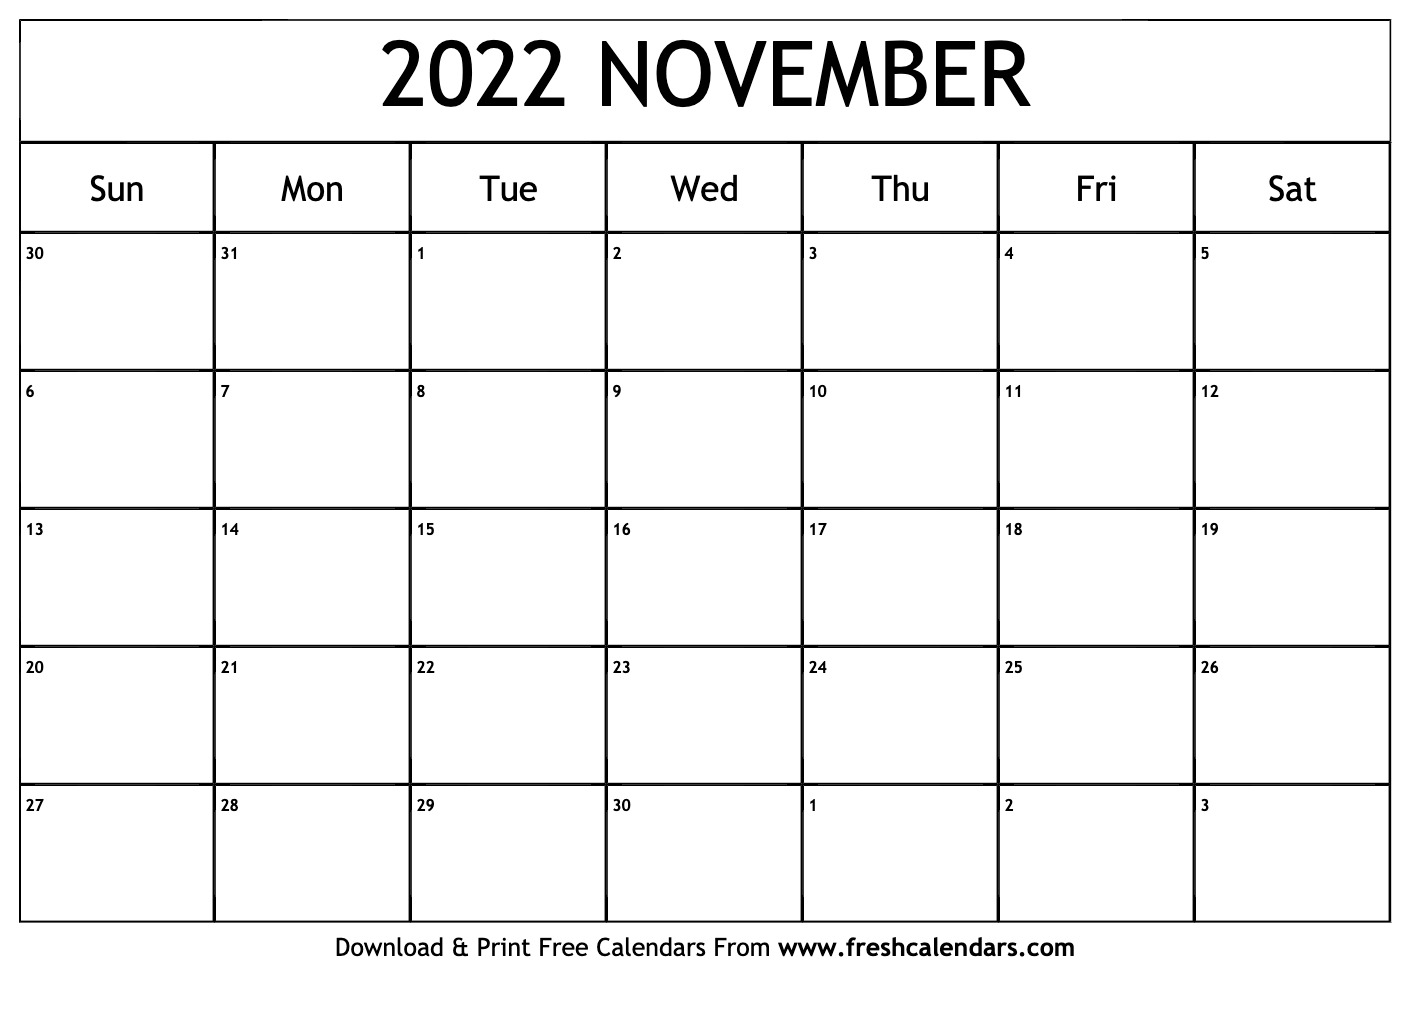 november-2022-calendar-jpeg-fresh-calendars-april-2022-calendar